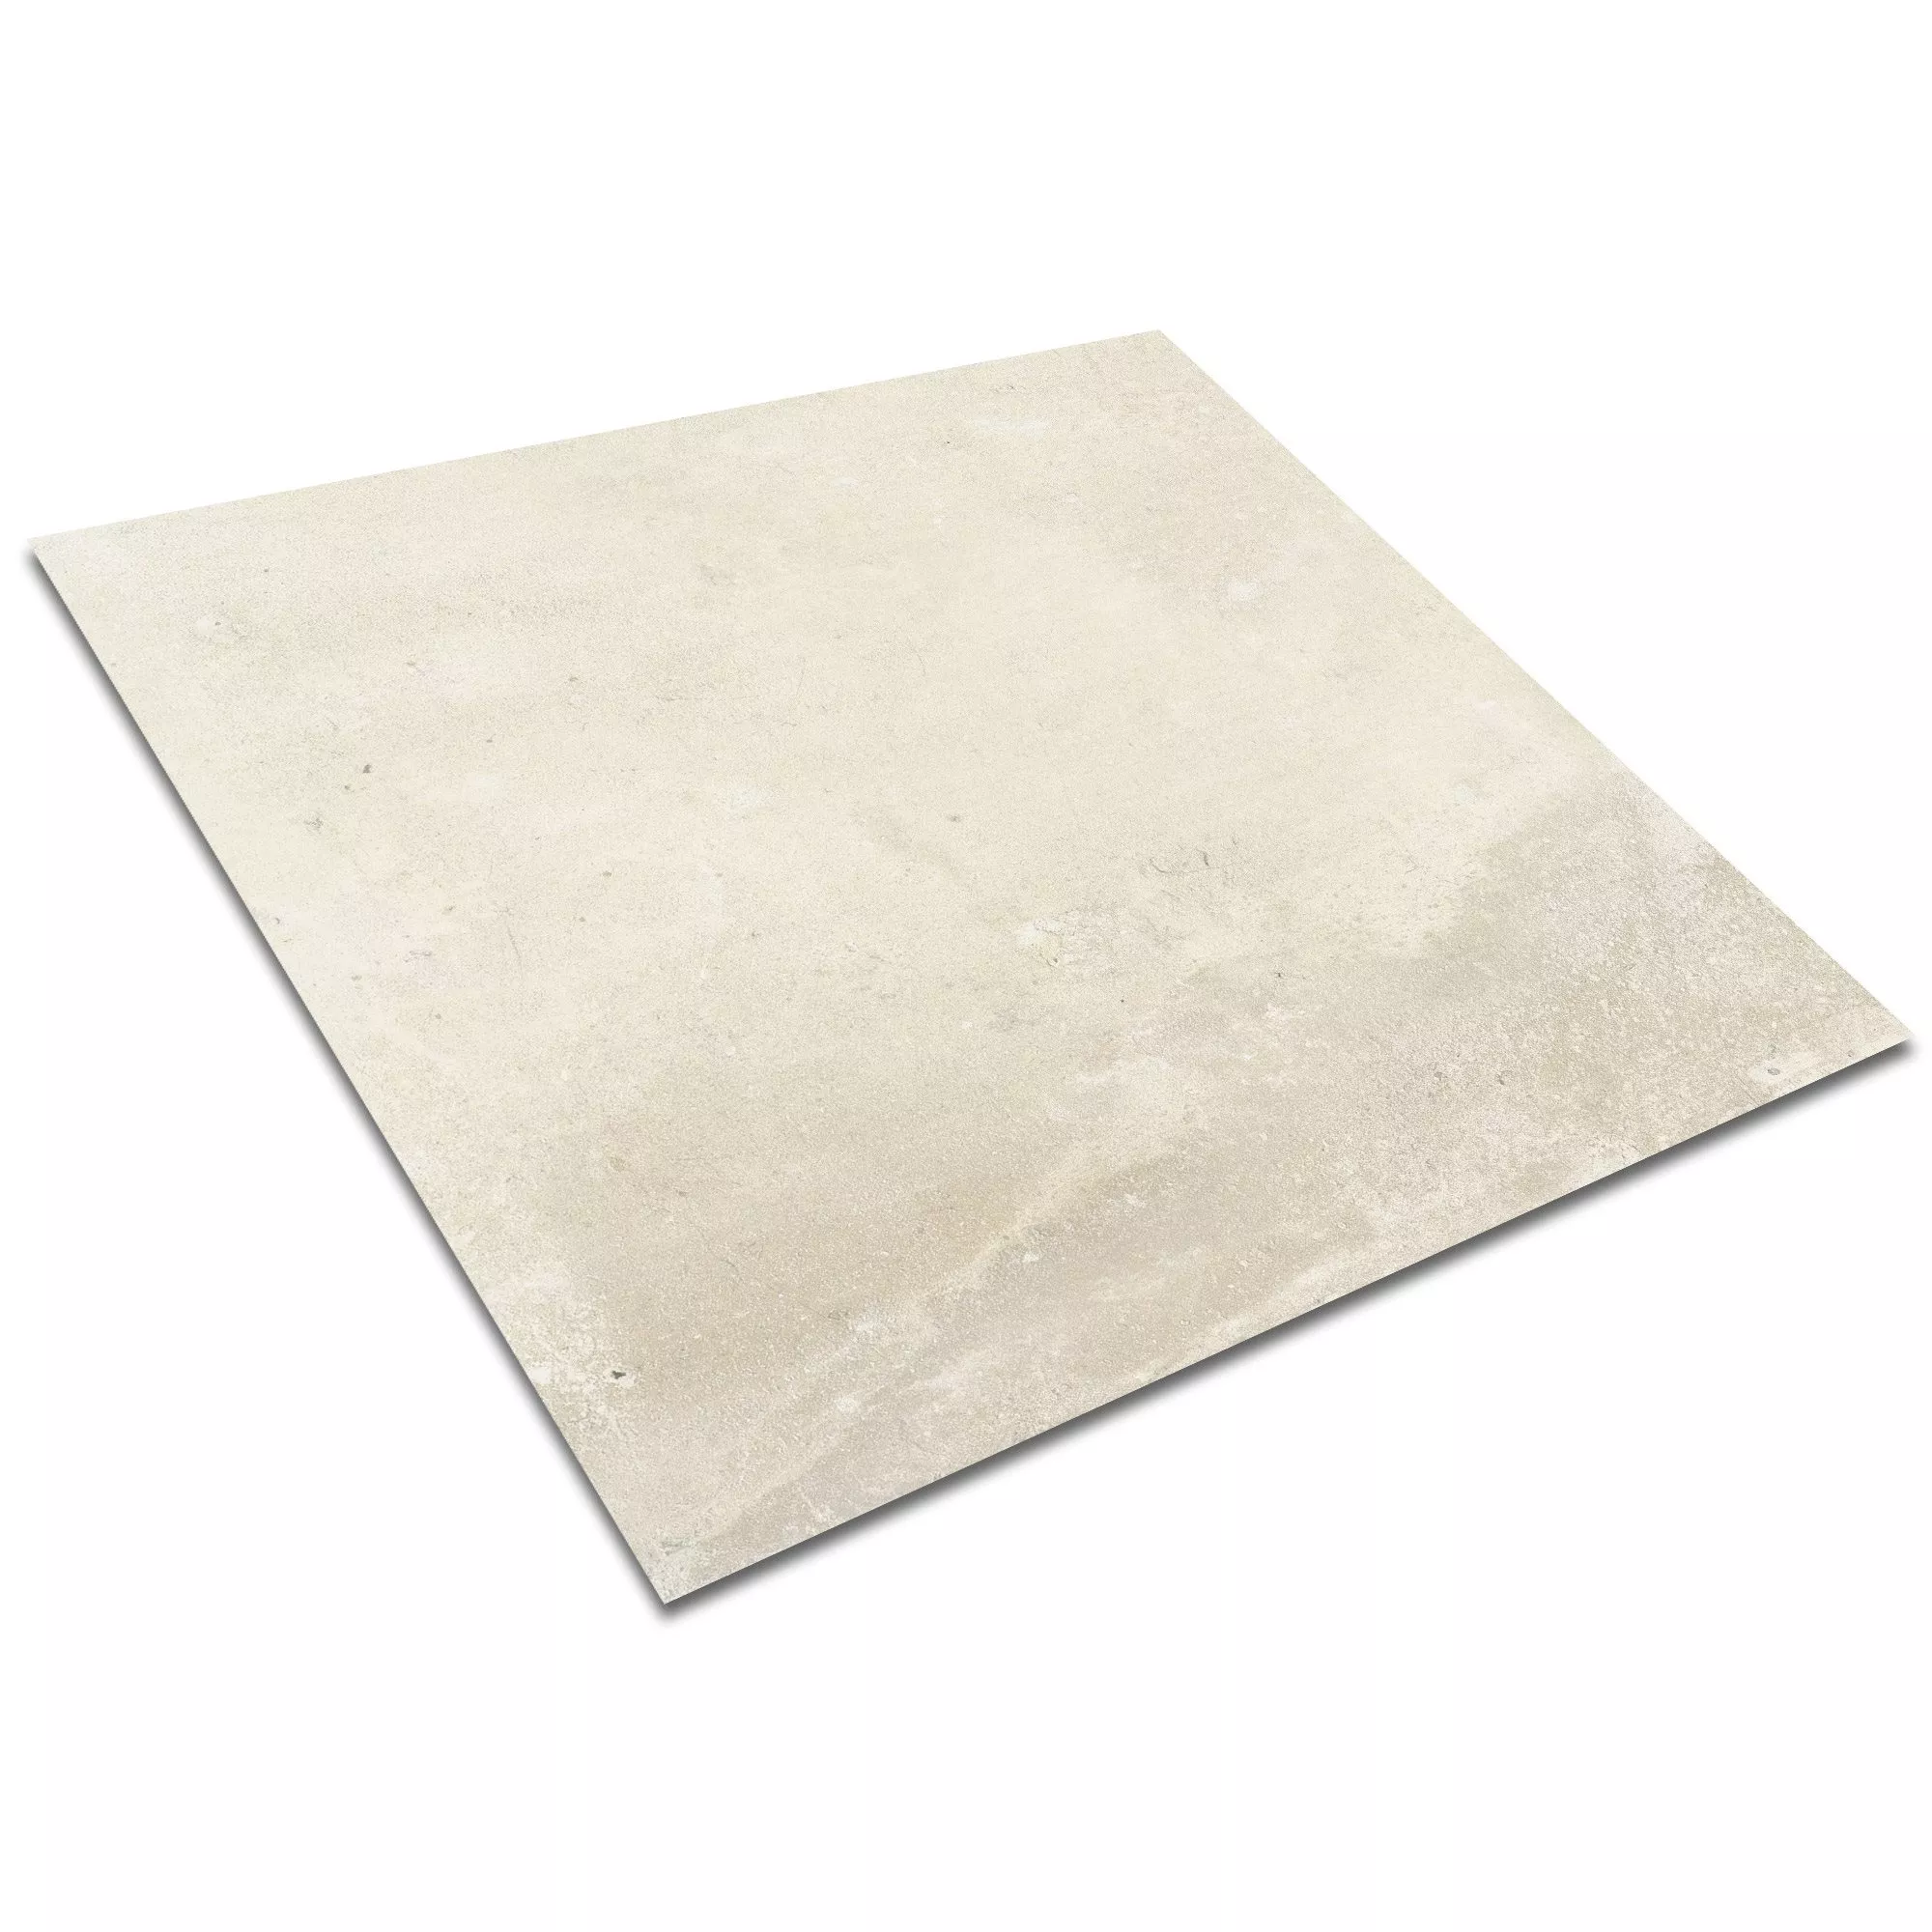 Sample Vloertegels Cement Optic Maryland Beige 60x60cm